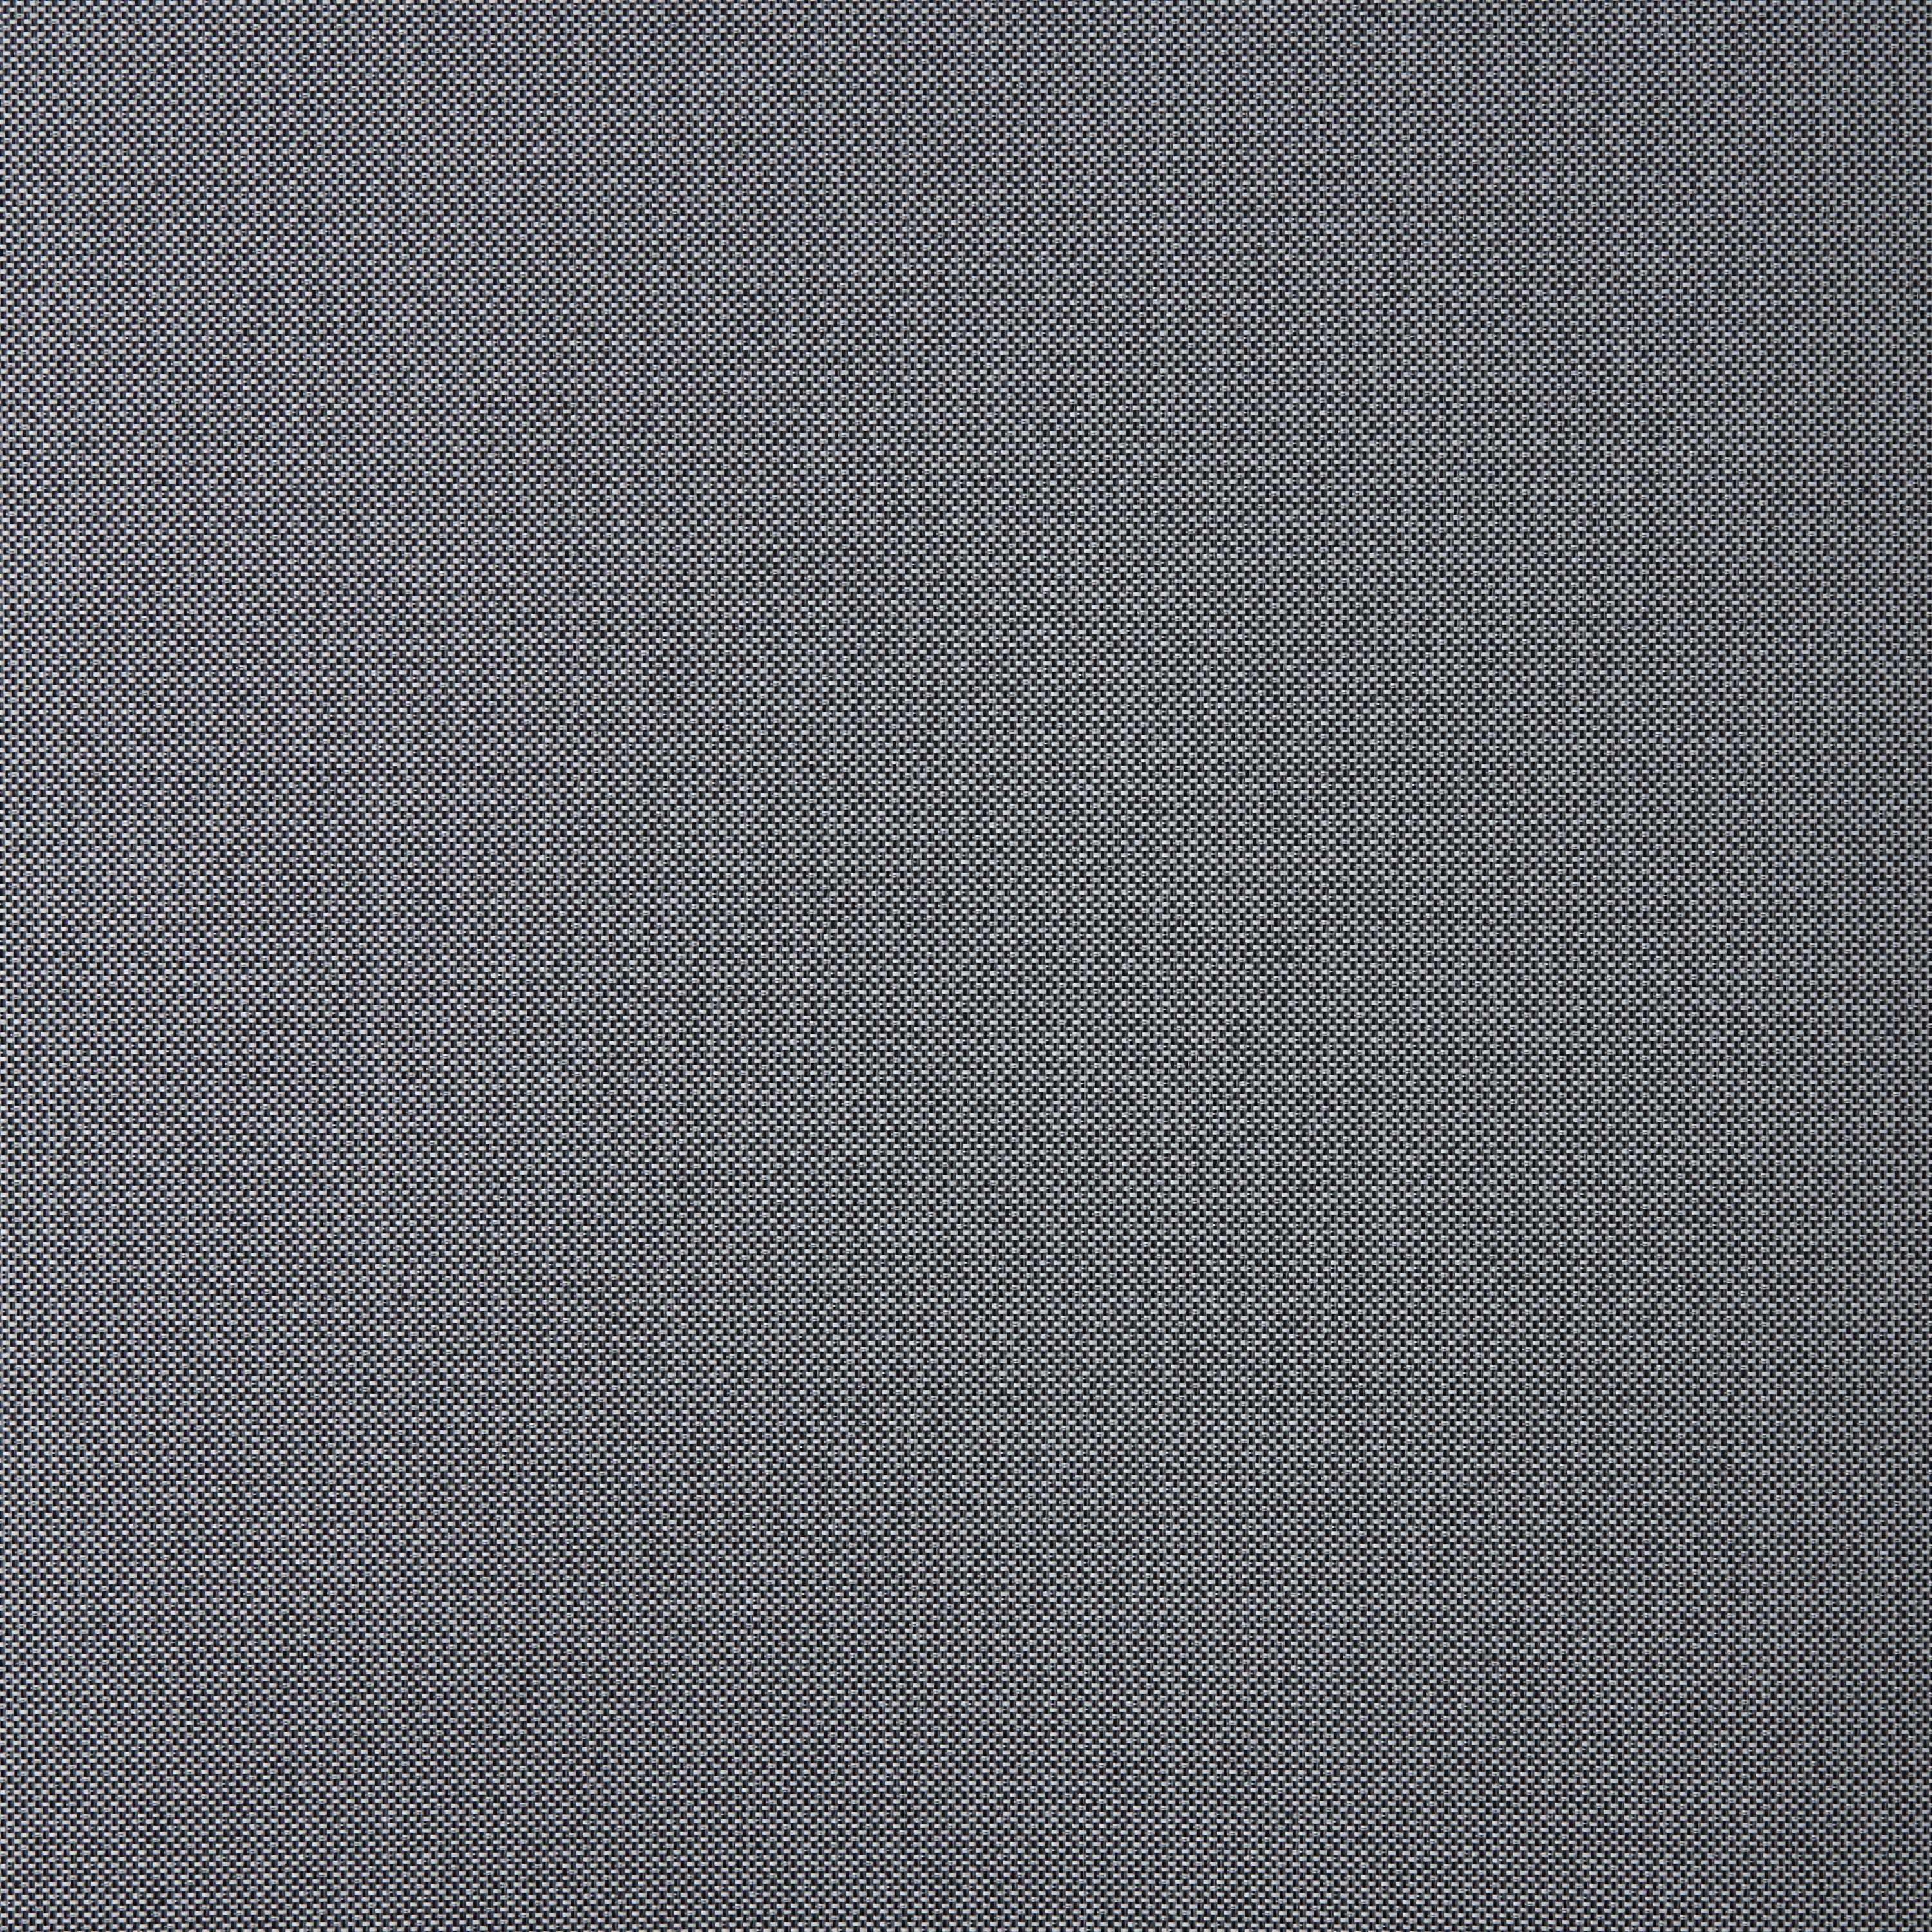 Iggy Corded Grey Plain Daylight Roller blind (W)120cm (L)180cm